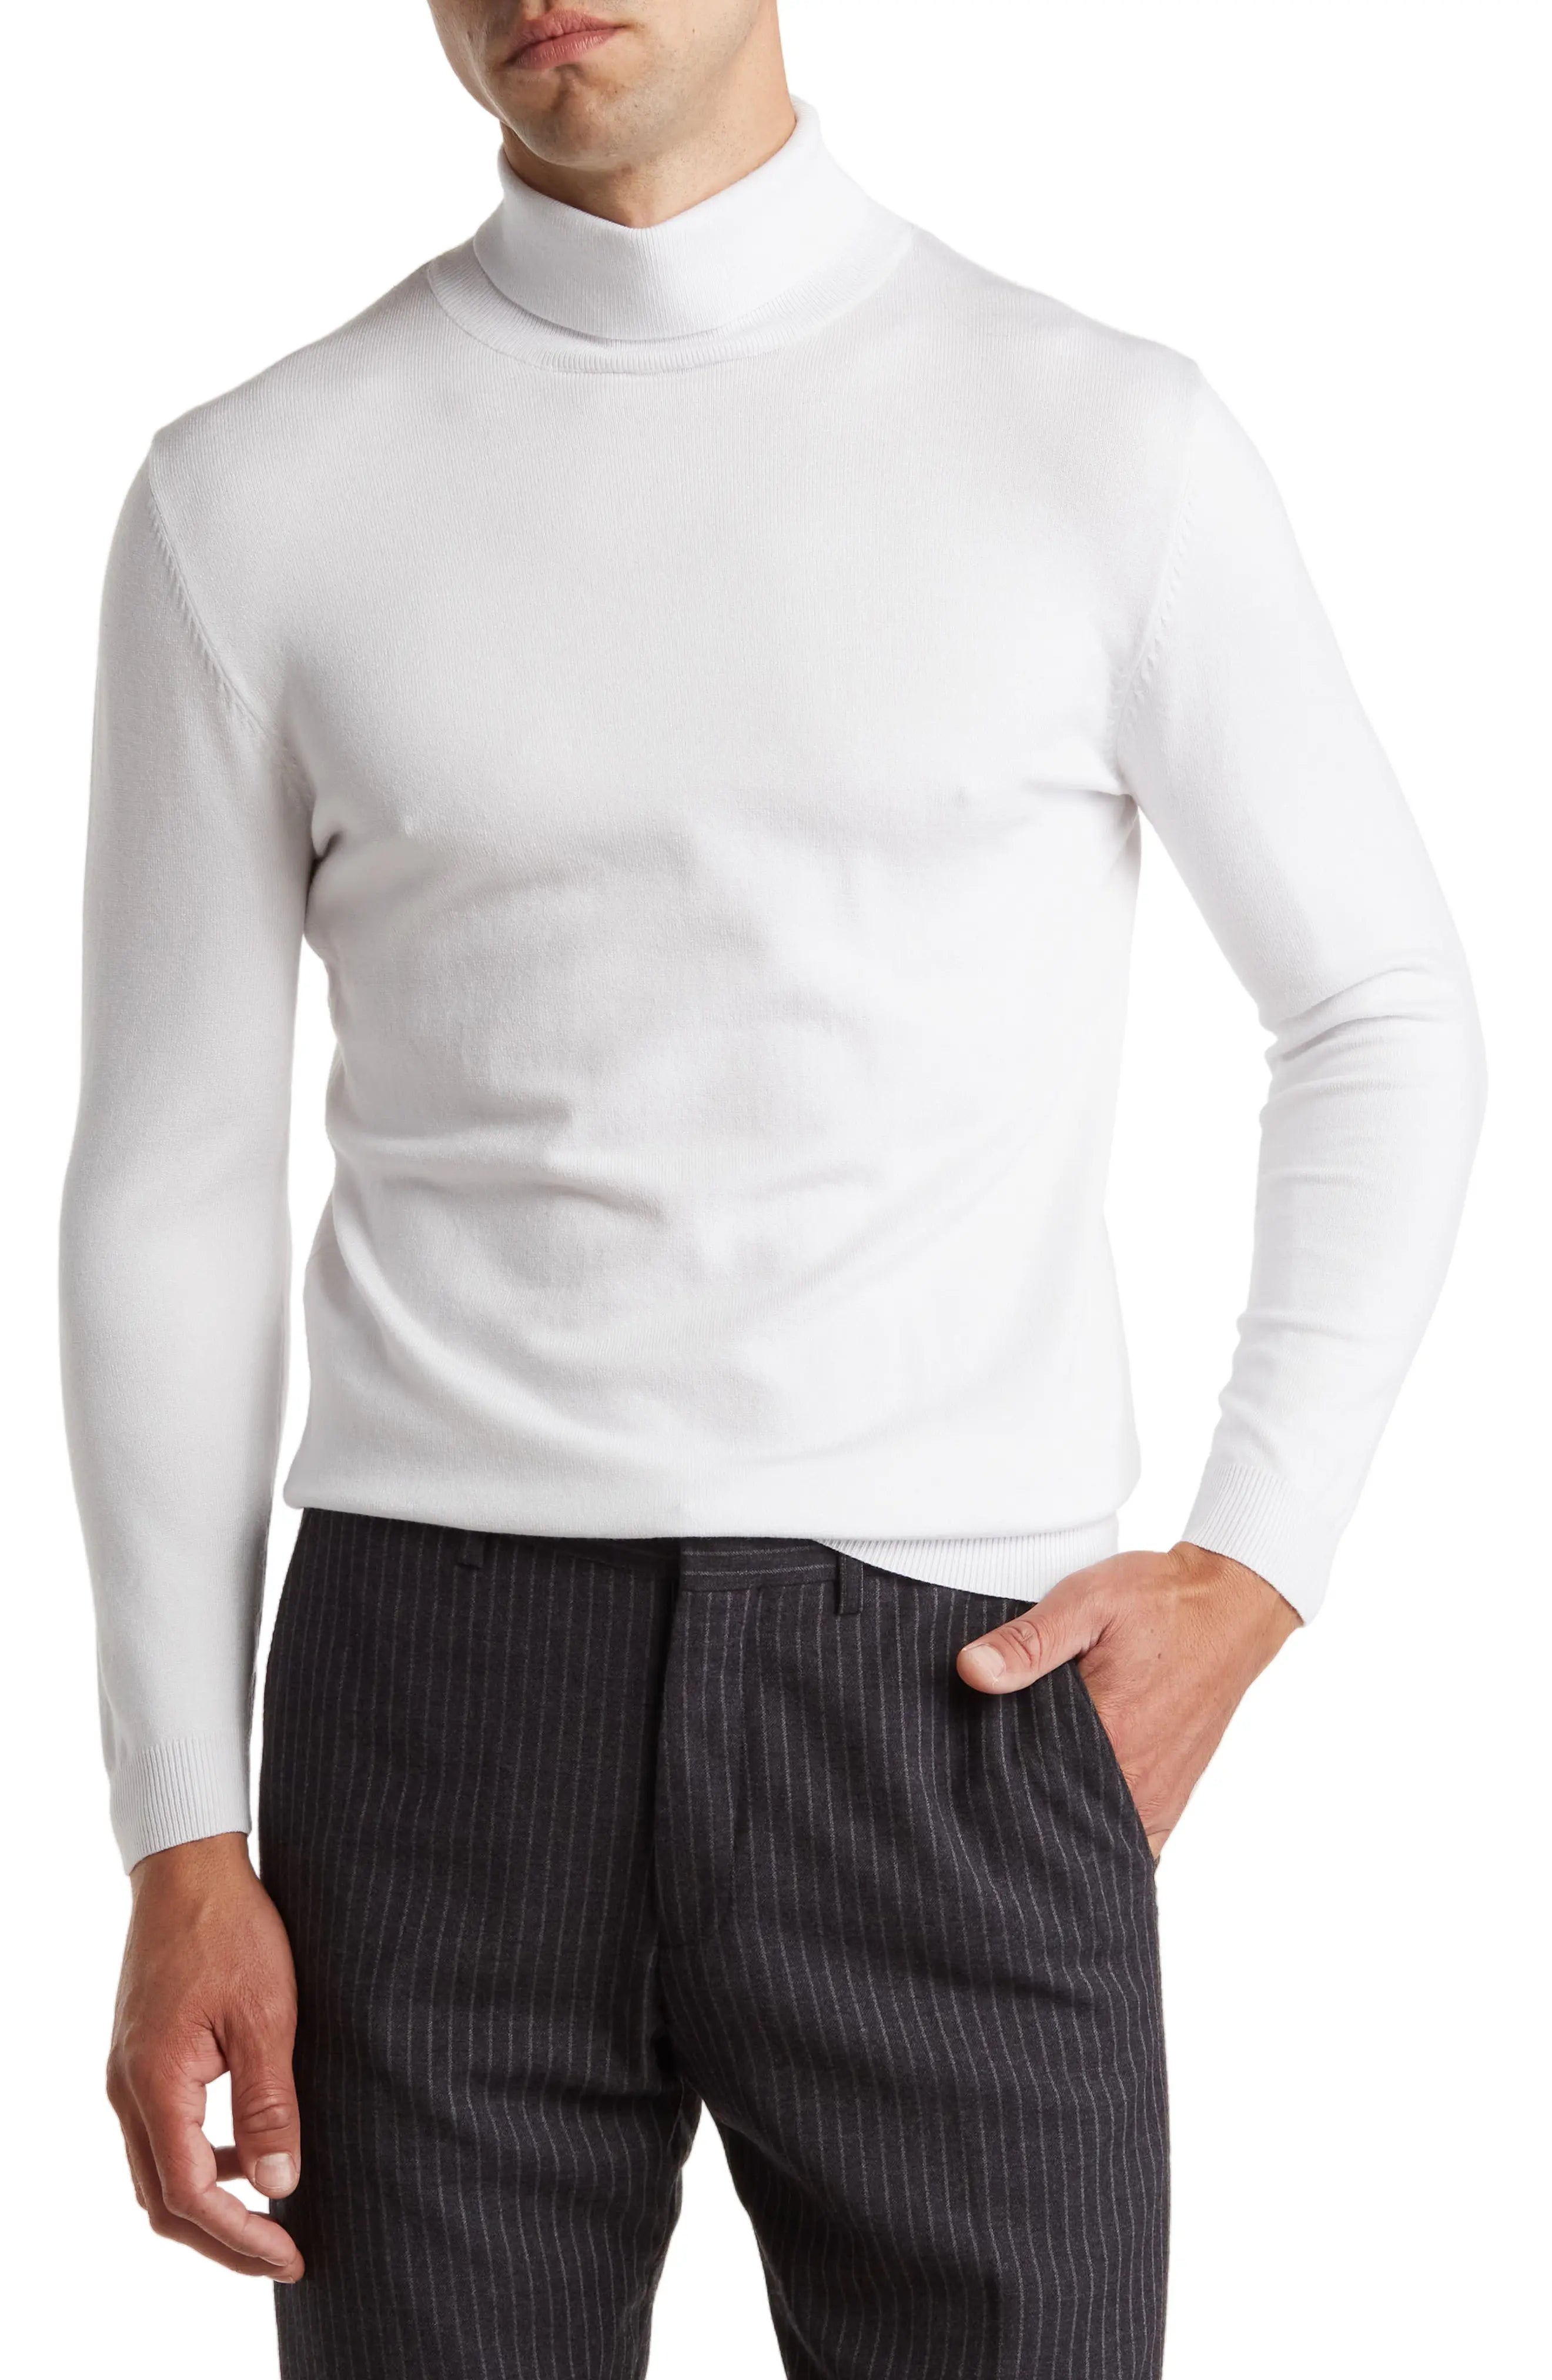 Performance Turtleneck Sweater White – Tom Baine